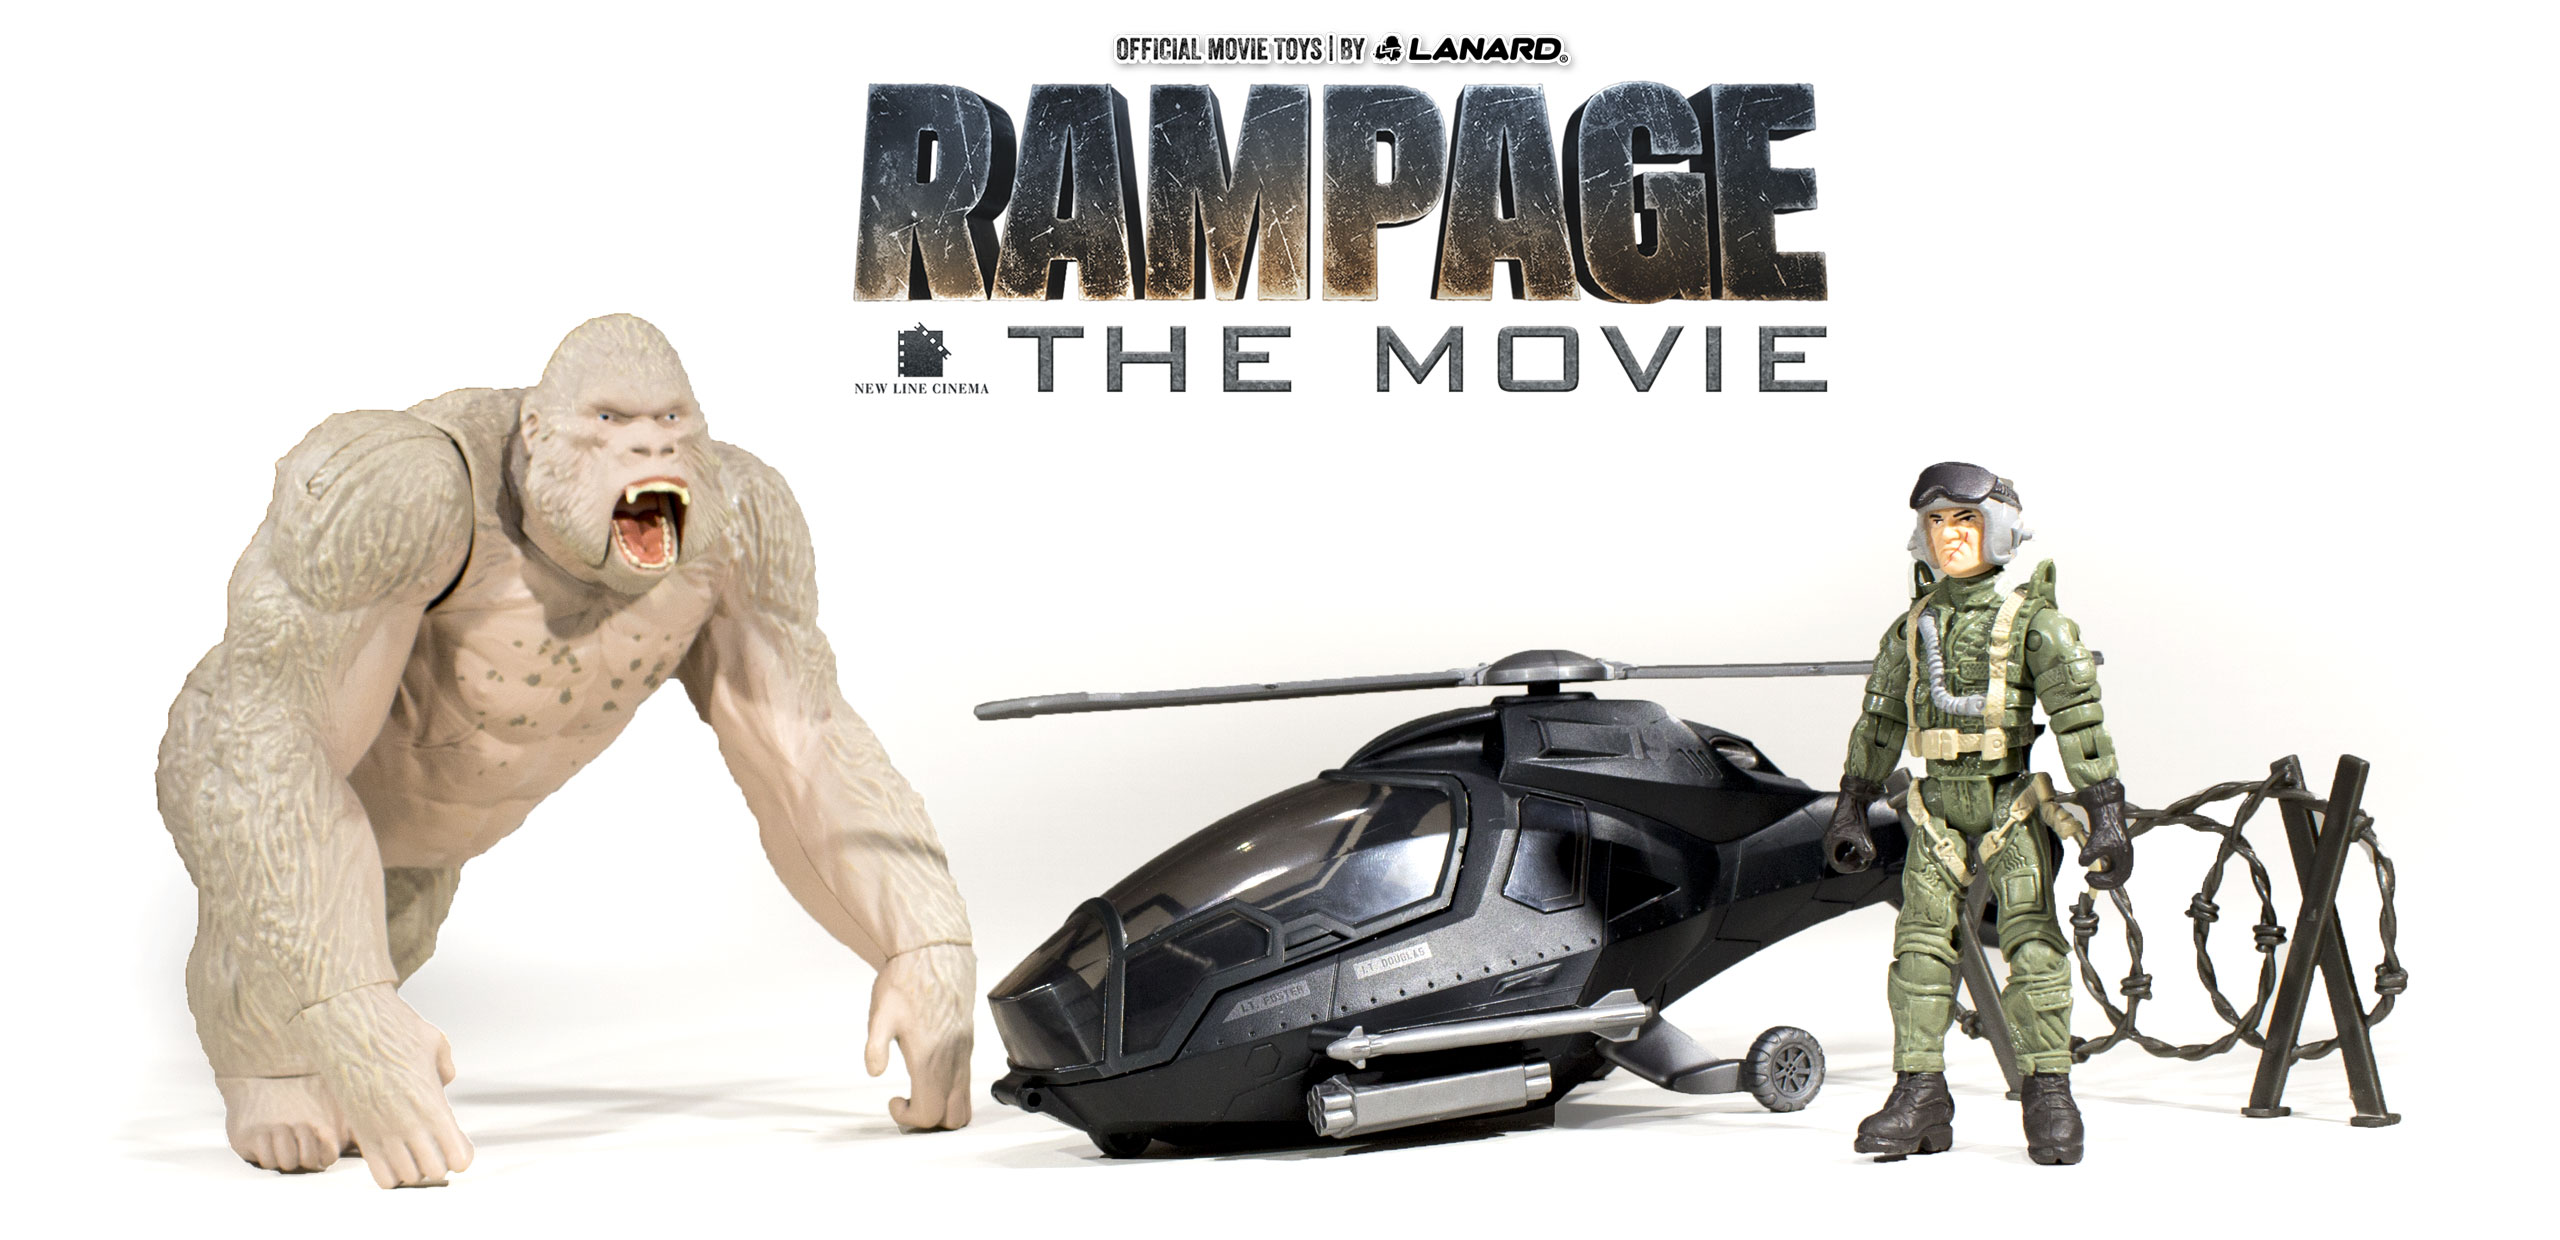 Rampage - Big City Brawl - Ralph With Figure - Walmart.com